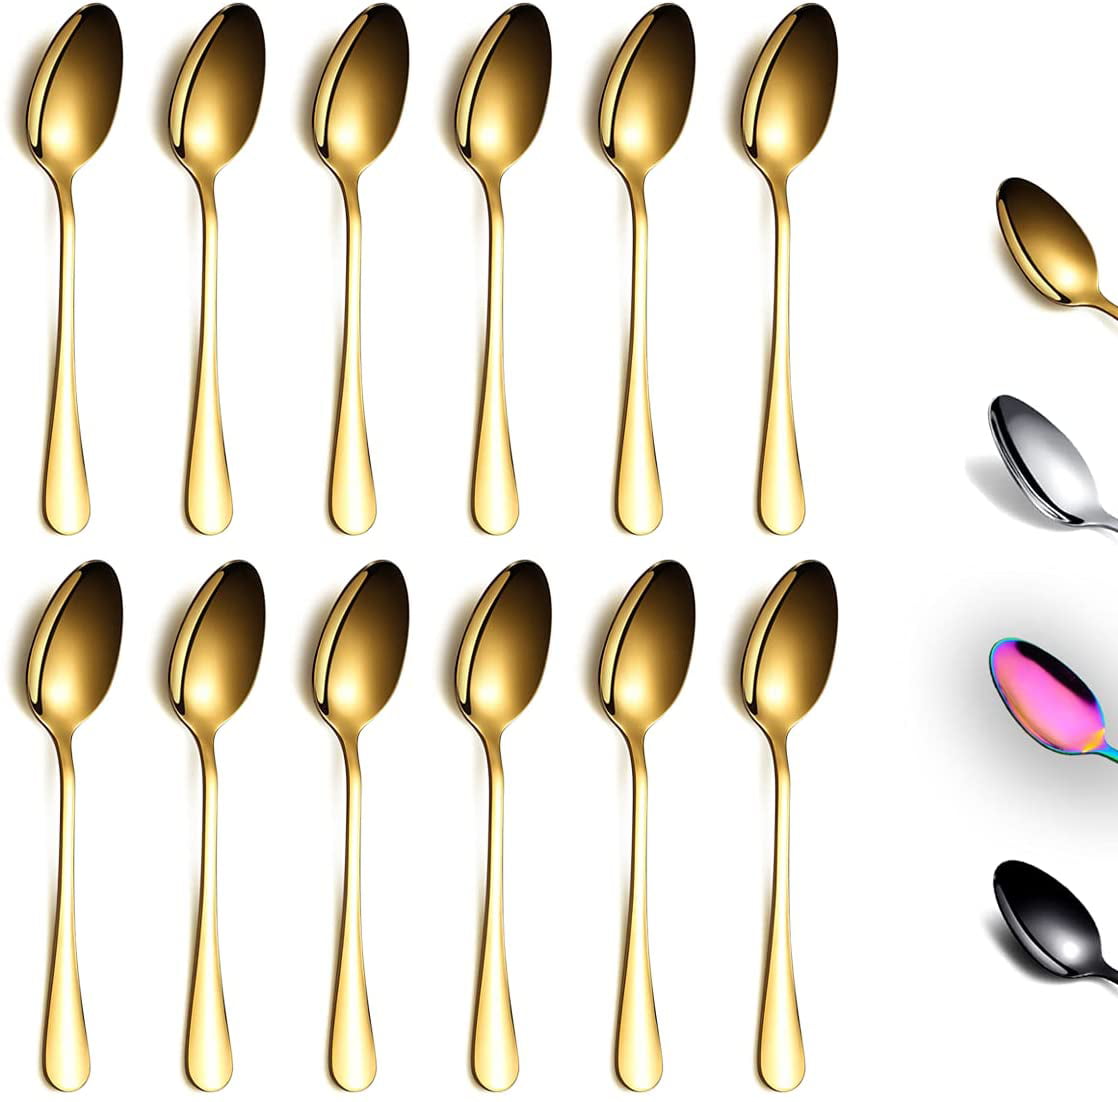 Home Office Kitchen 6 Stainless Steel Metal Tea Spoons Evokk Cutlery Spoon 